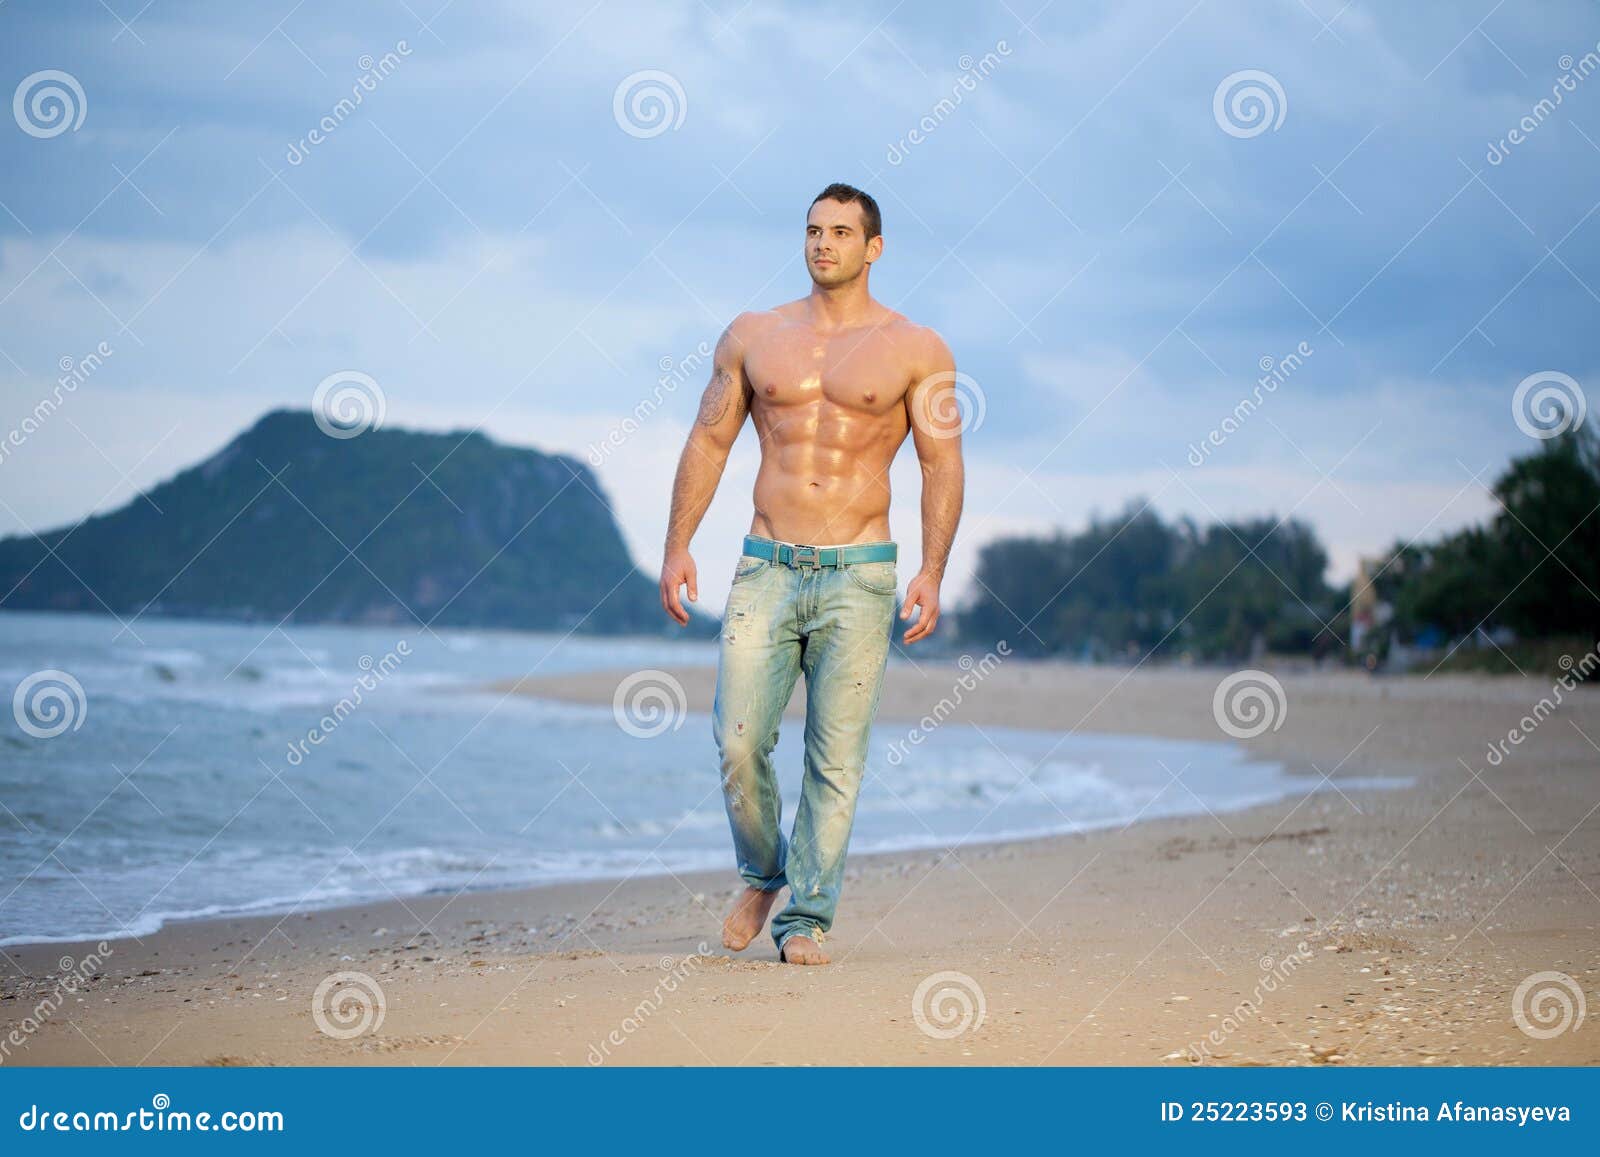 muscular male walking along a beach